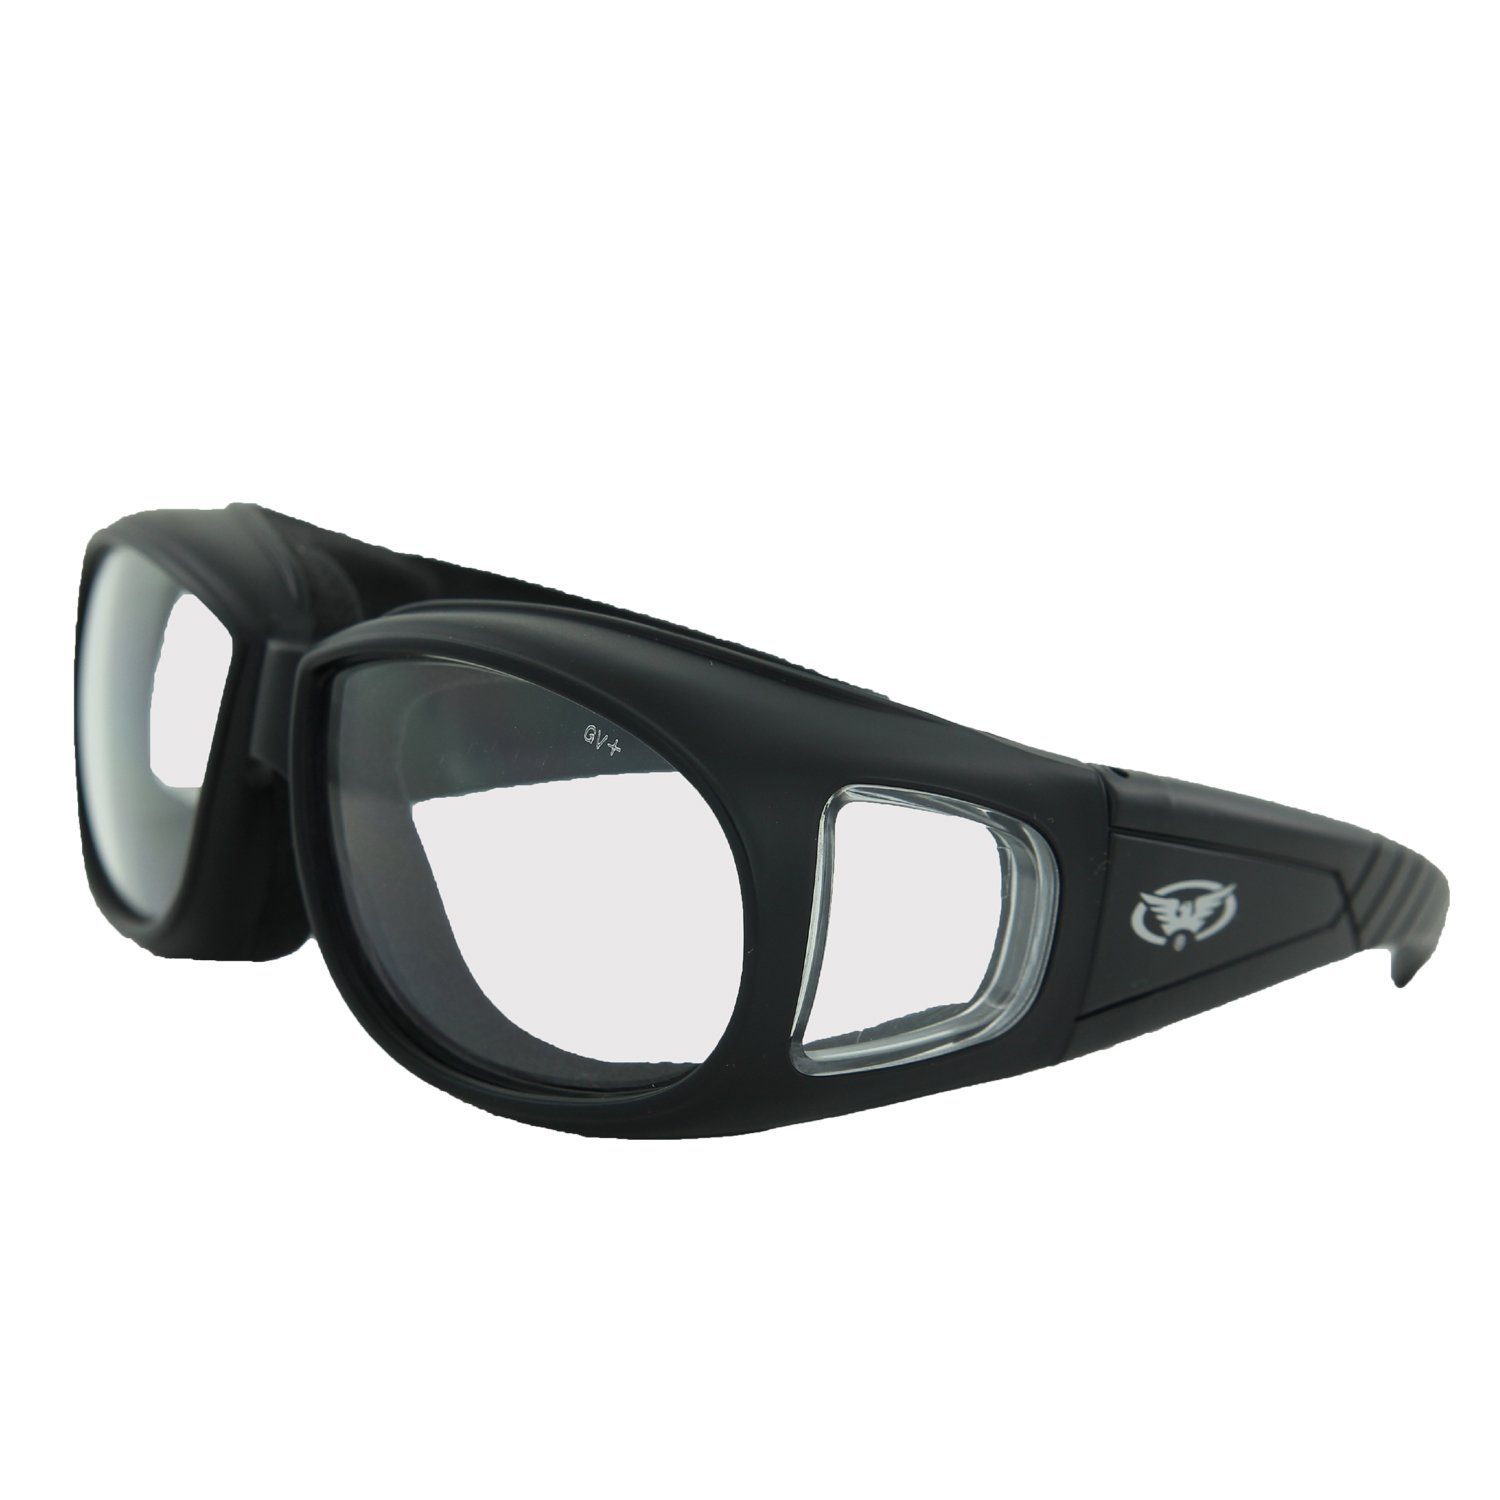 Outfitter Global Global Vision CL Vision Motorradbrille